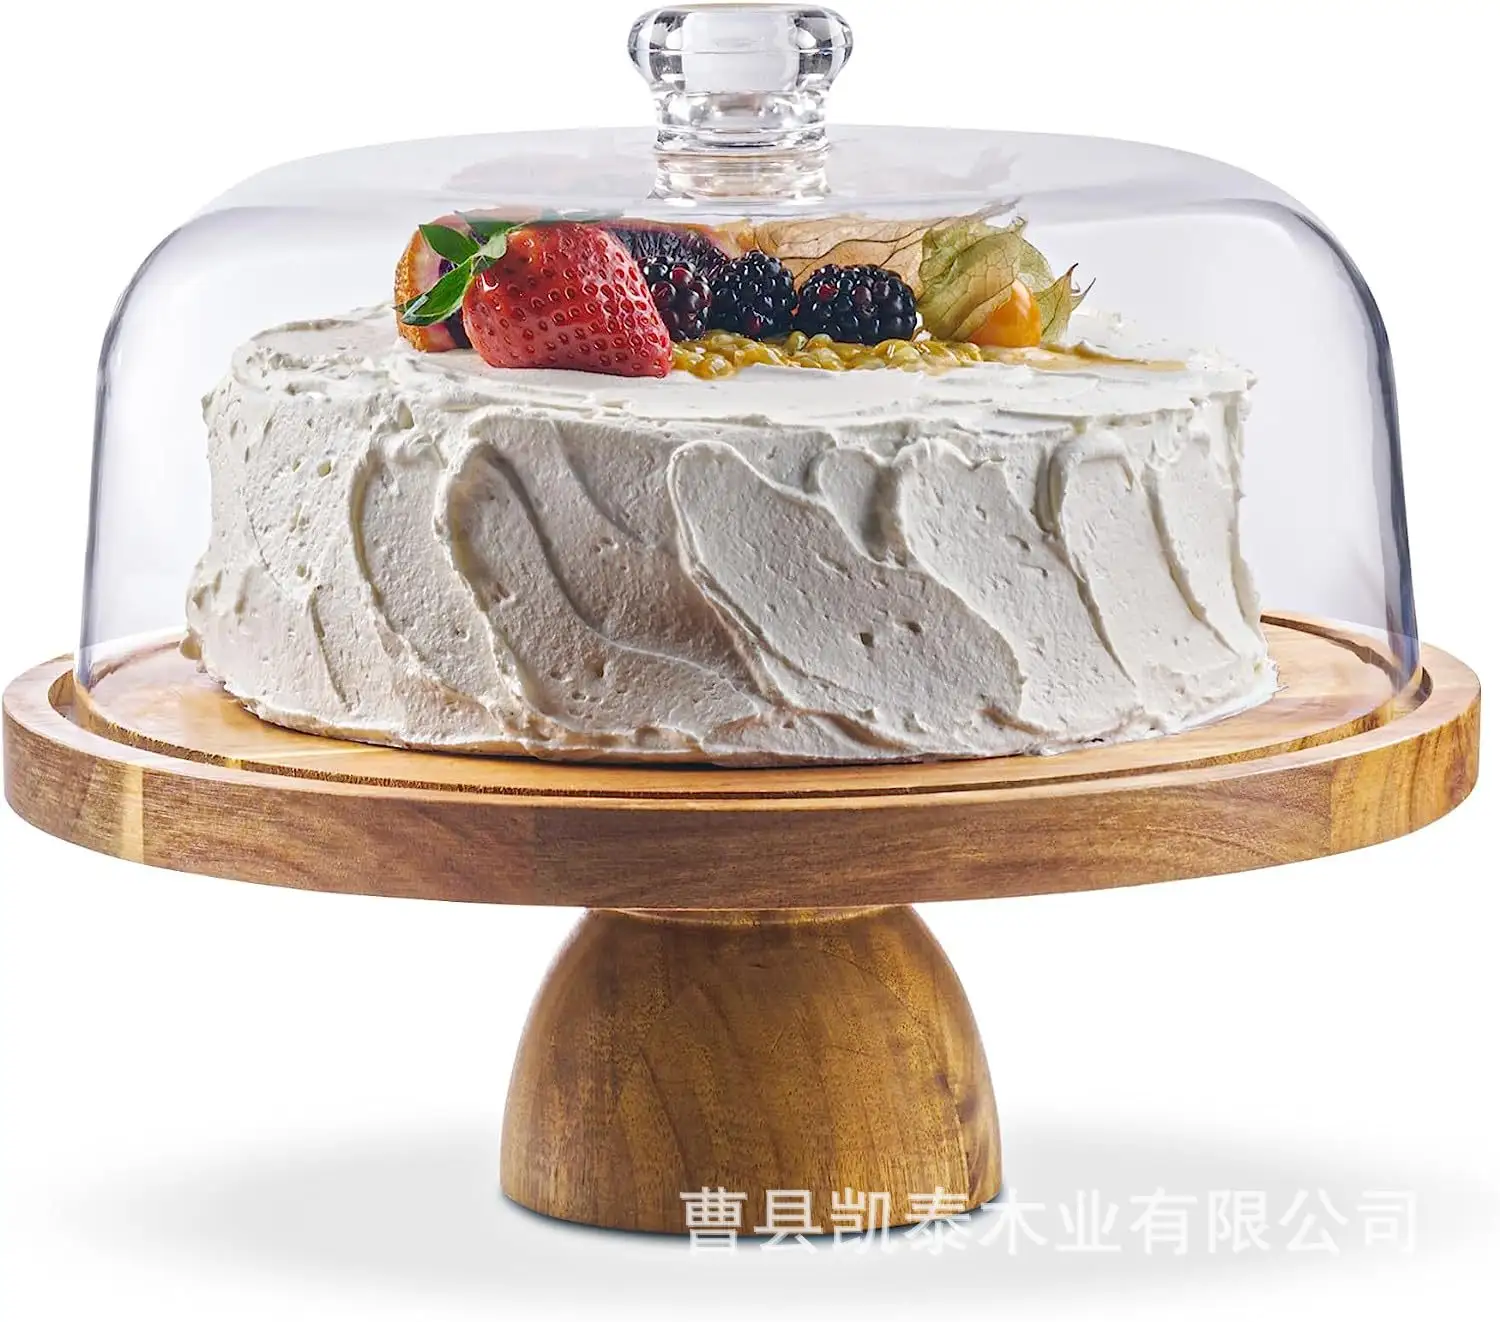 CT78 baki tampilan kue, dudukan Server untuk kue dapur dengan kayu dengan dasar bening akrilik tutup kubah meja putar dudukan kue